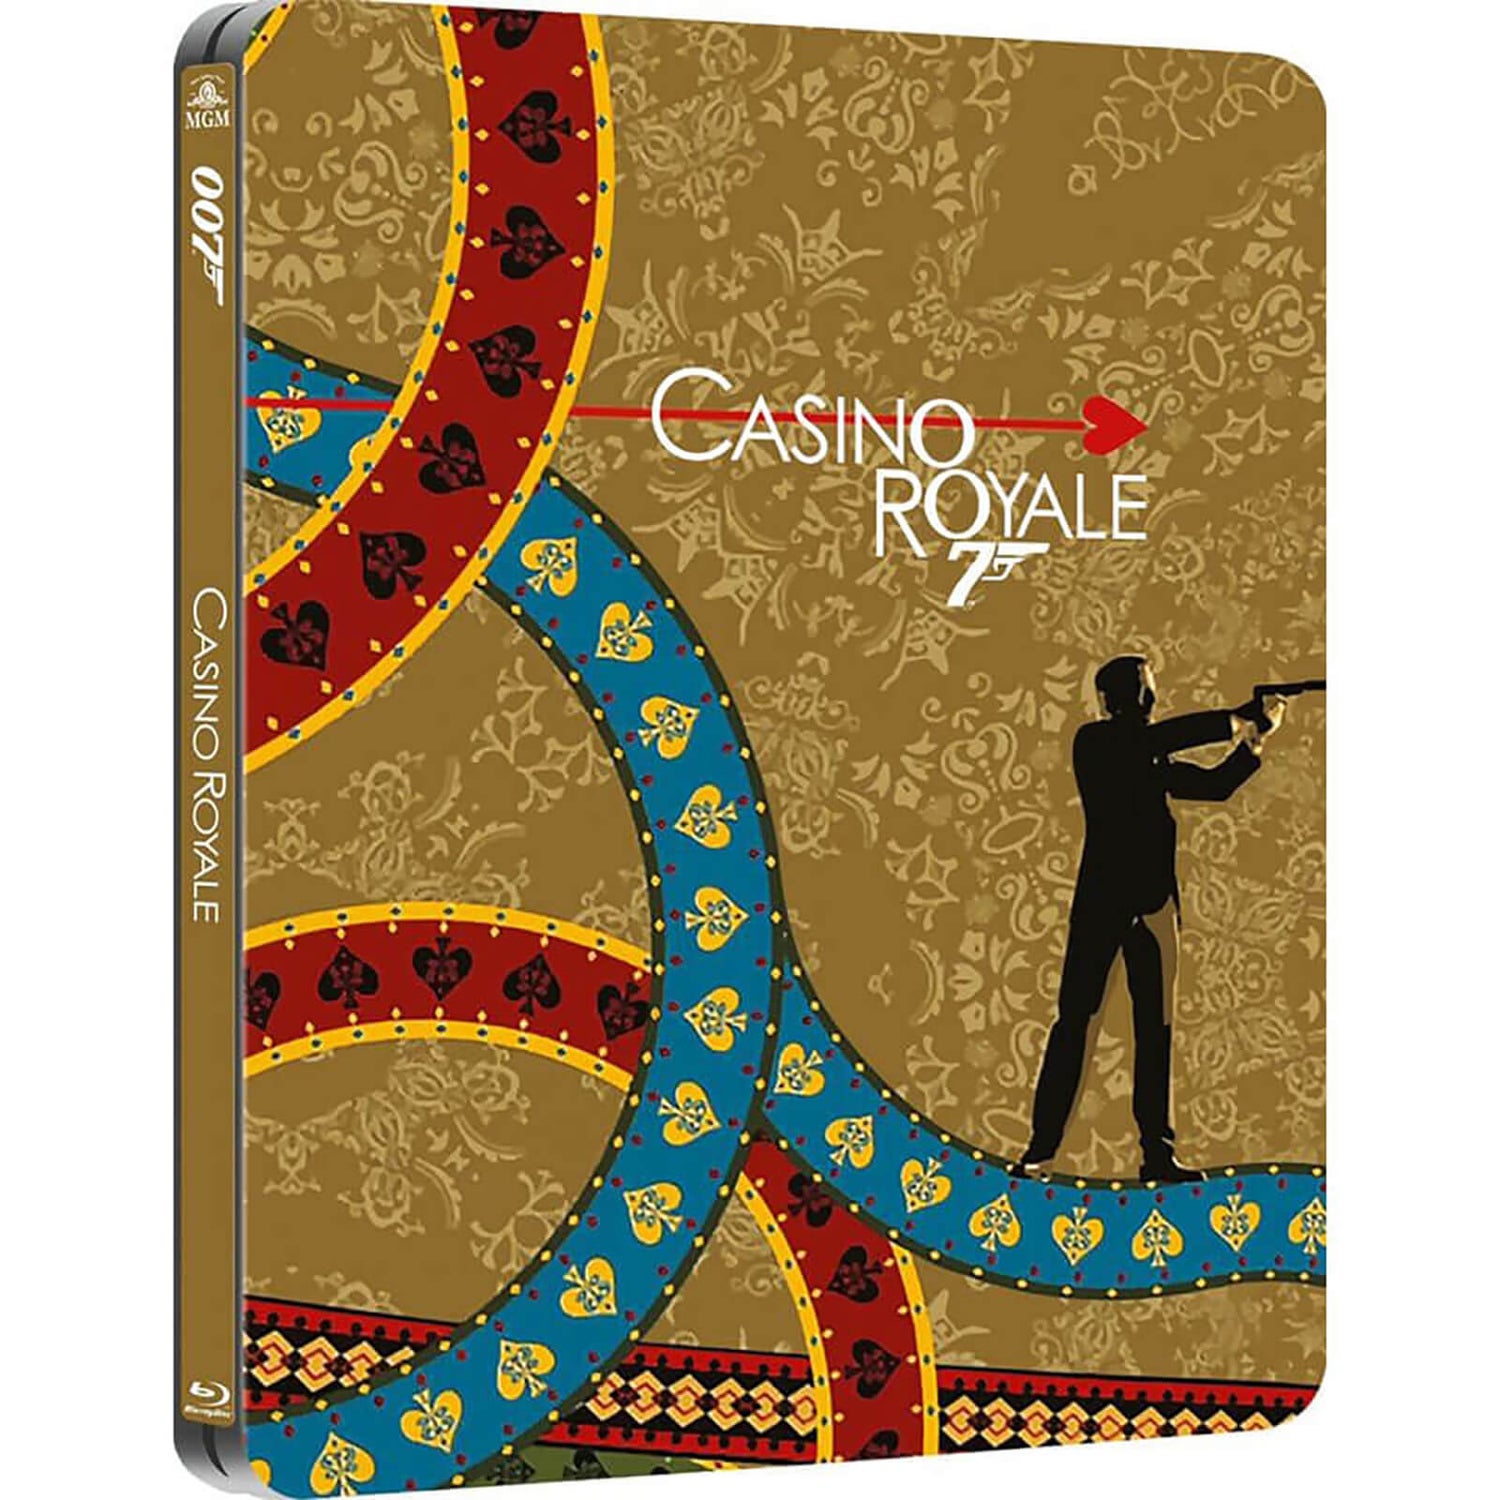 Casino Royale - Zavvi UK Exclusive Limited Edition Steelbook